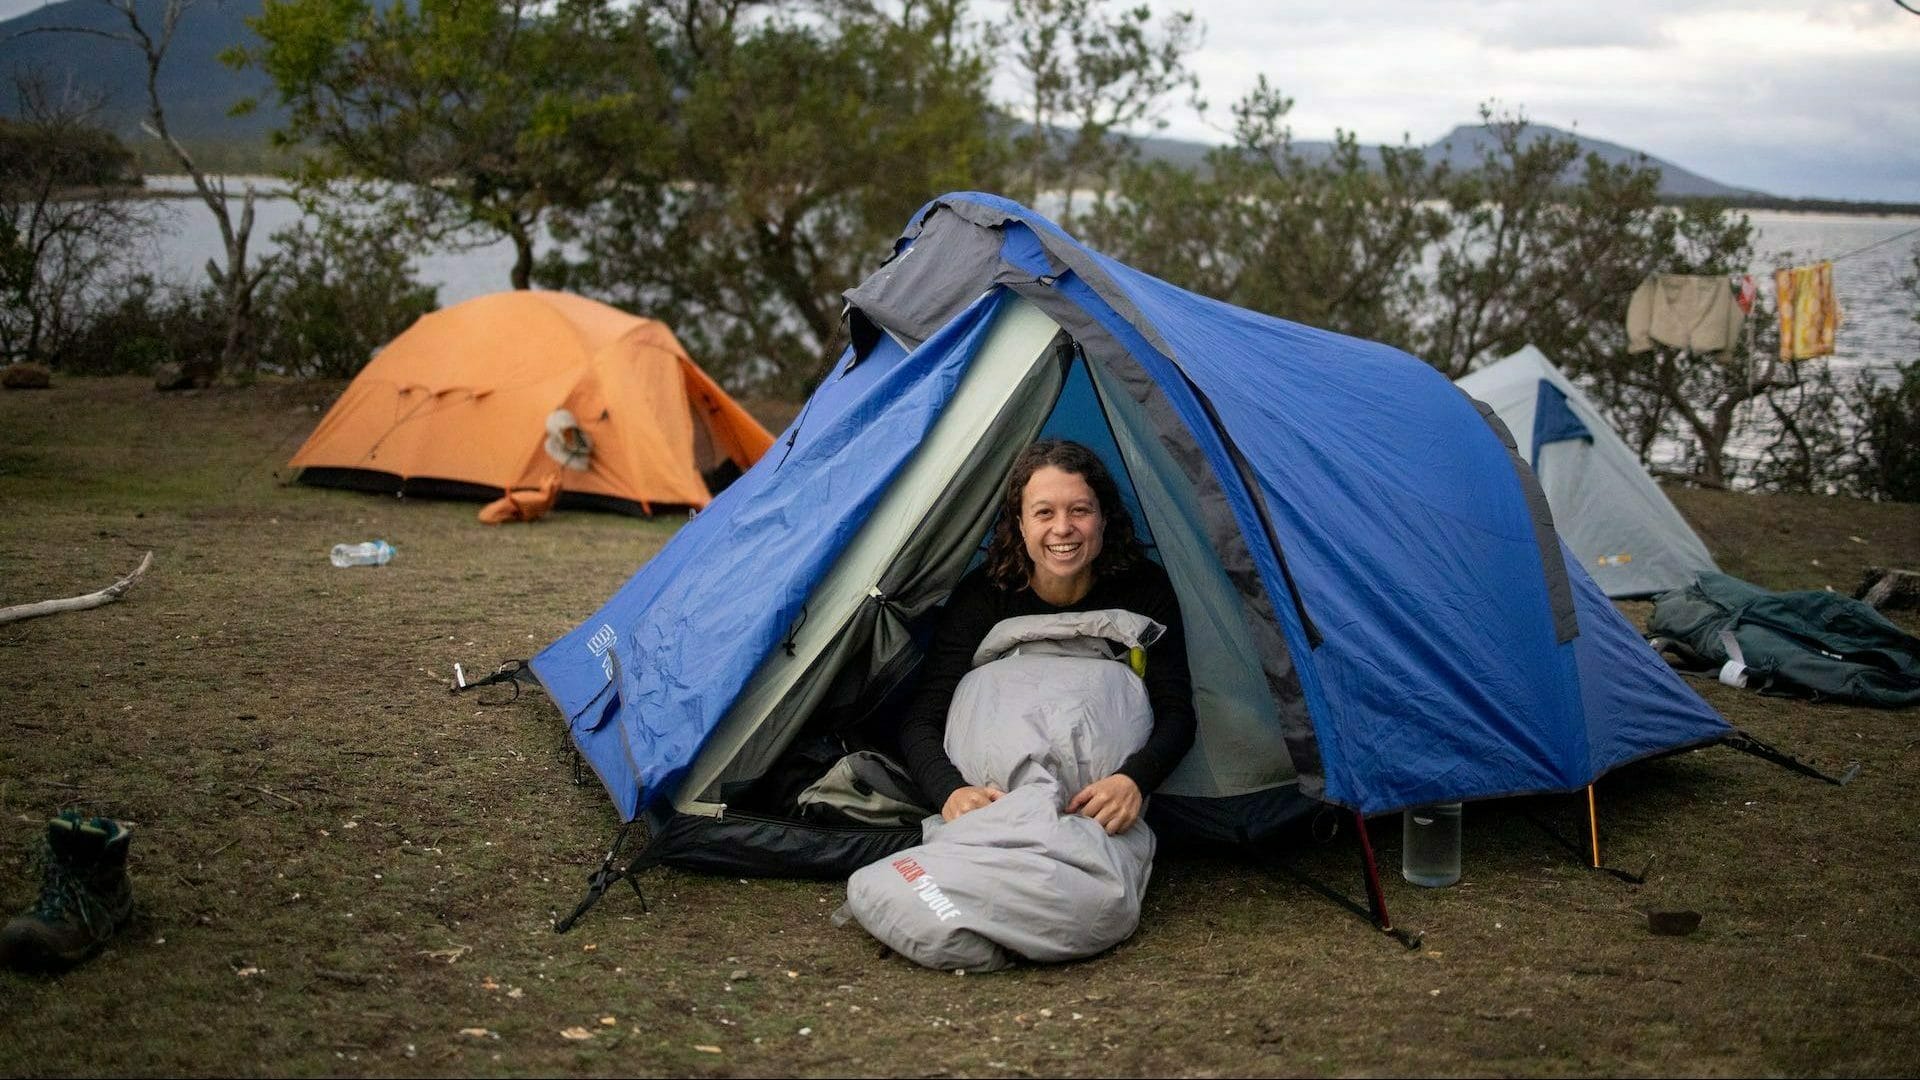 Blackwolf Pro Series Women’s Sleeping Bag Minus 5 – Gear Review, photo by Jacob Boylan, Bee, smile, happy, camping, tent, Tassie